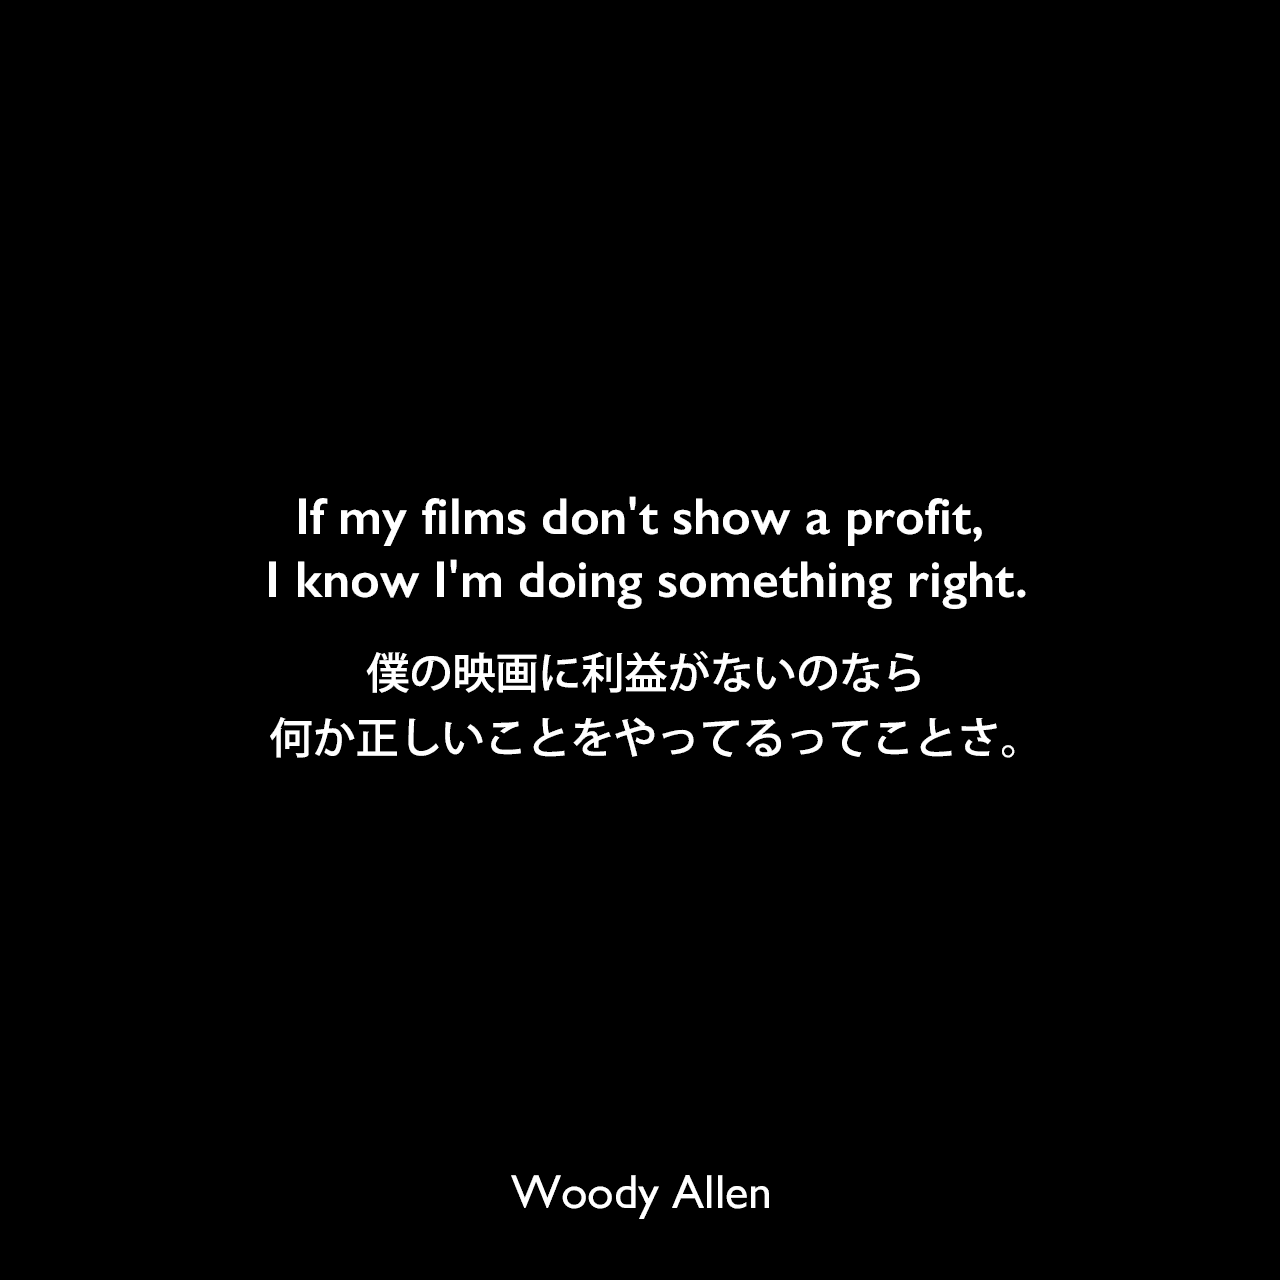 If my films don't show a profit, I know I'm doing something right.僕の映画に利益がないのなら、何か正しいことをやってるってことさ。Woody Allen